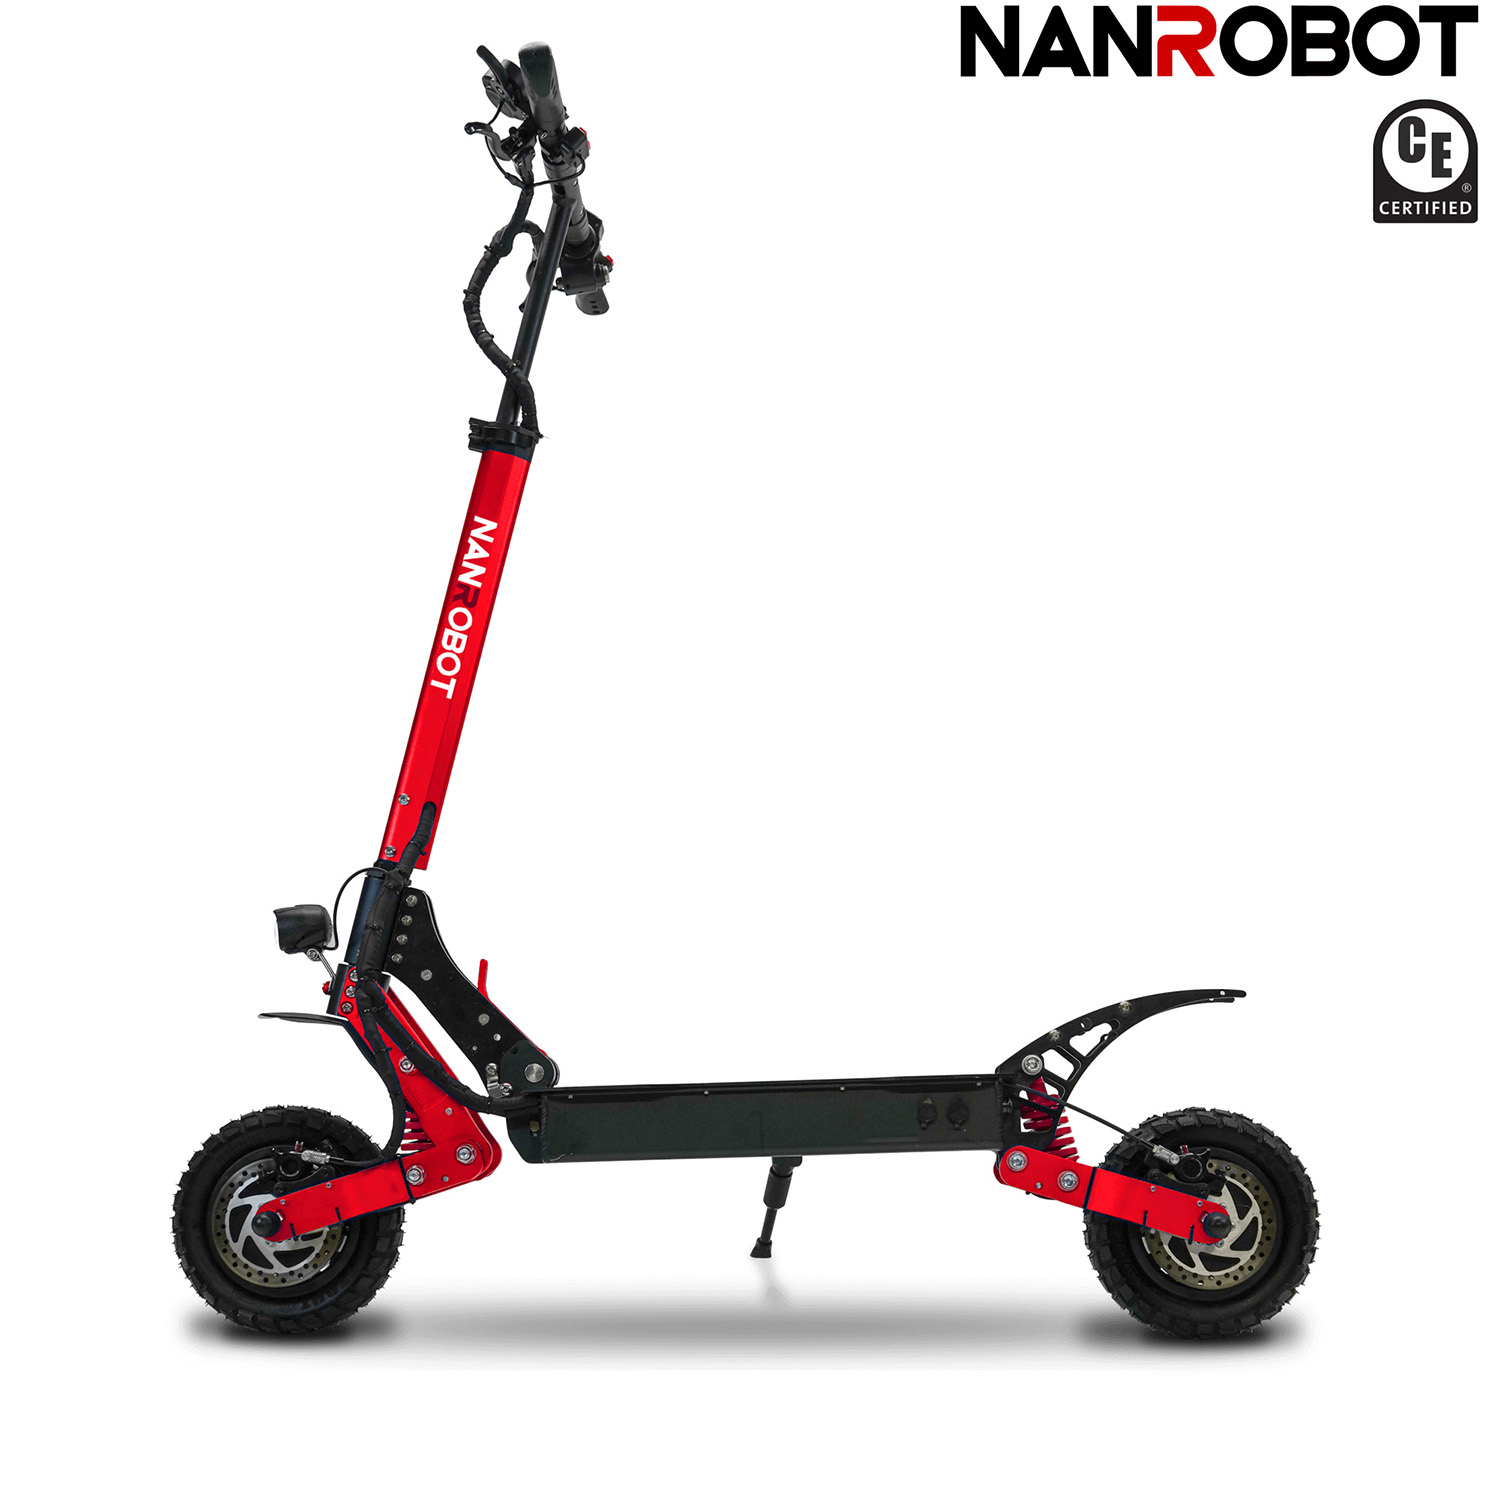 Nanrobot D4+ 3.0 electric scooter